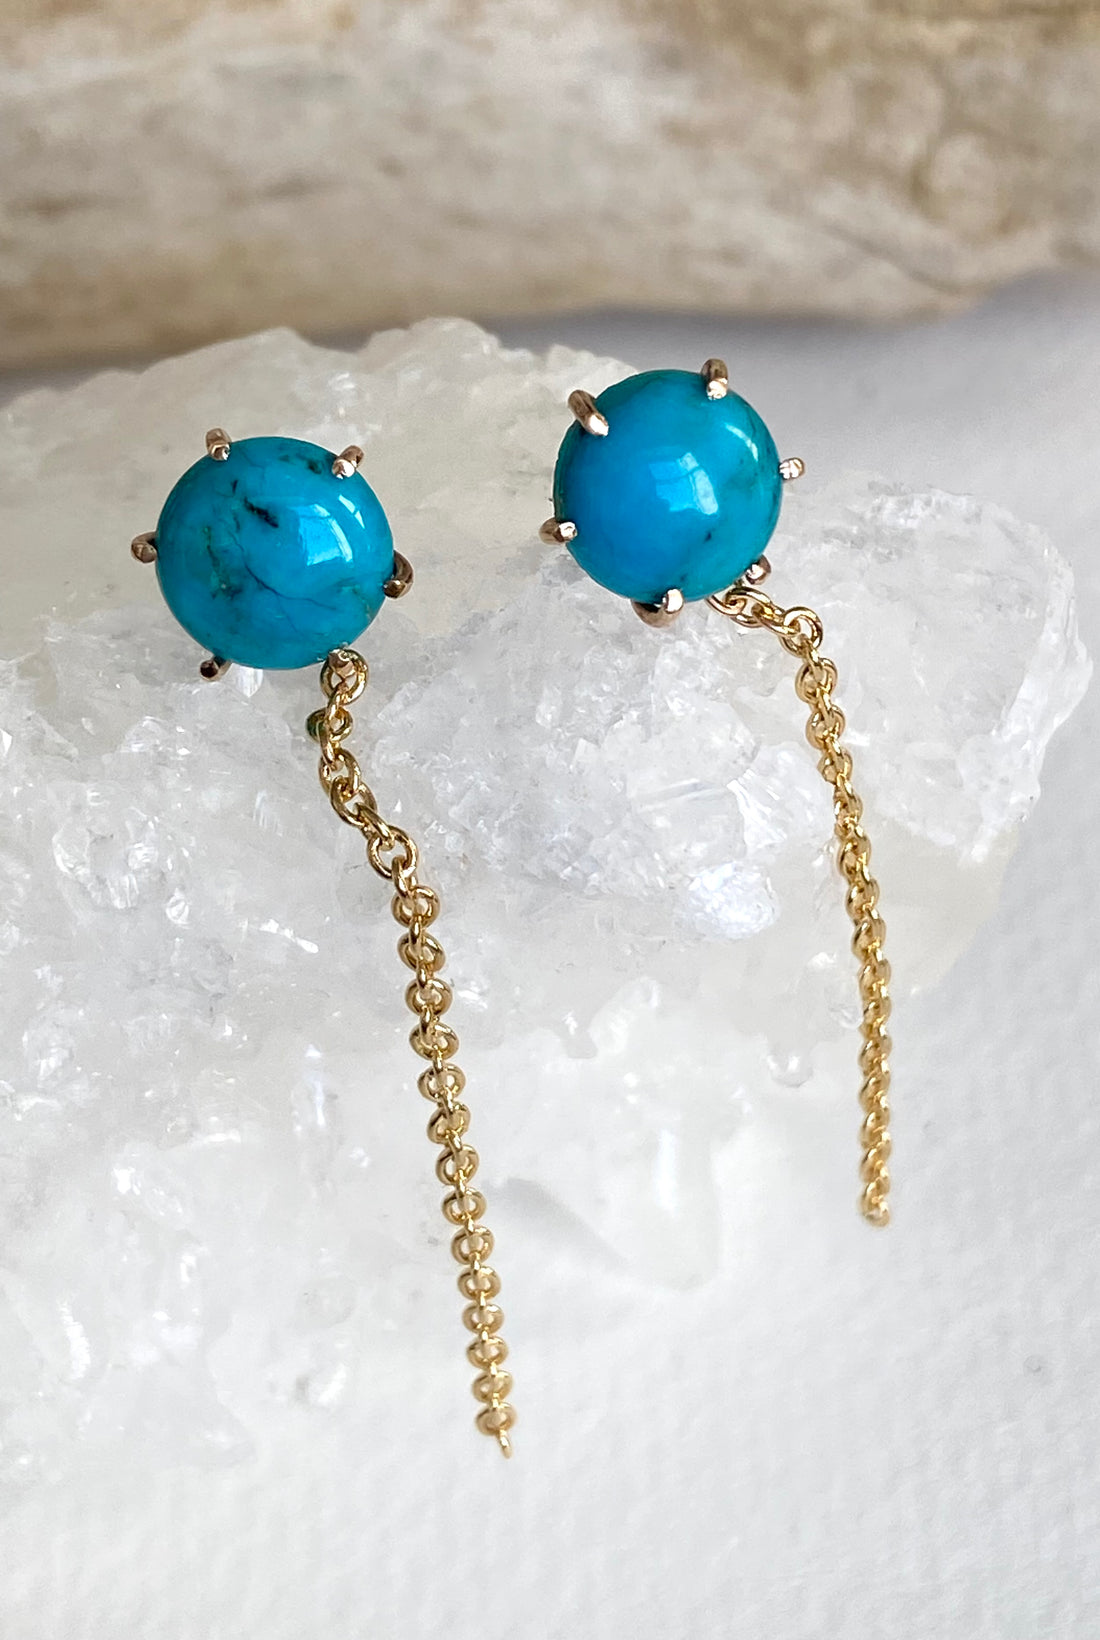 Arizona Turquoise Long Chain Earrings, December Birthstone Earrings